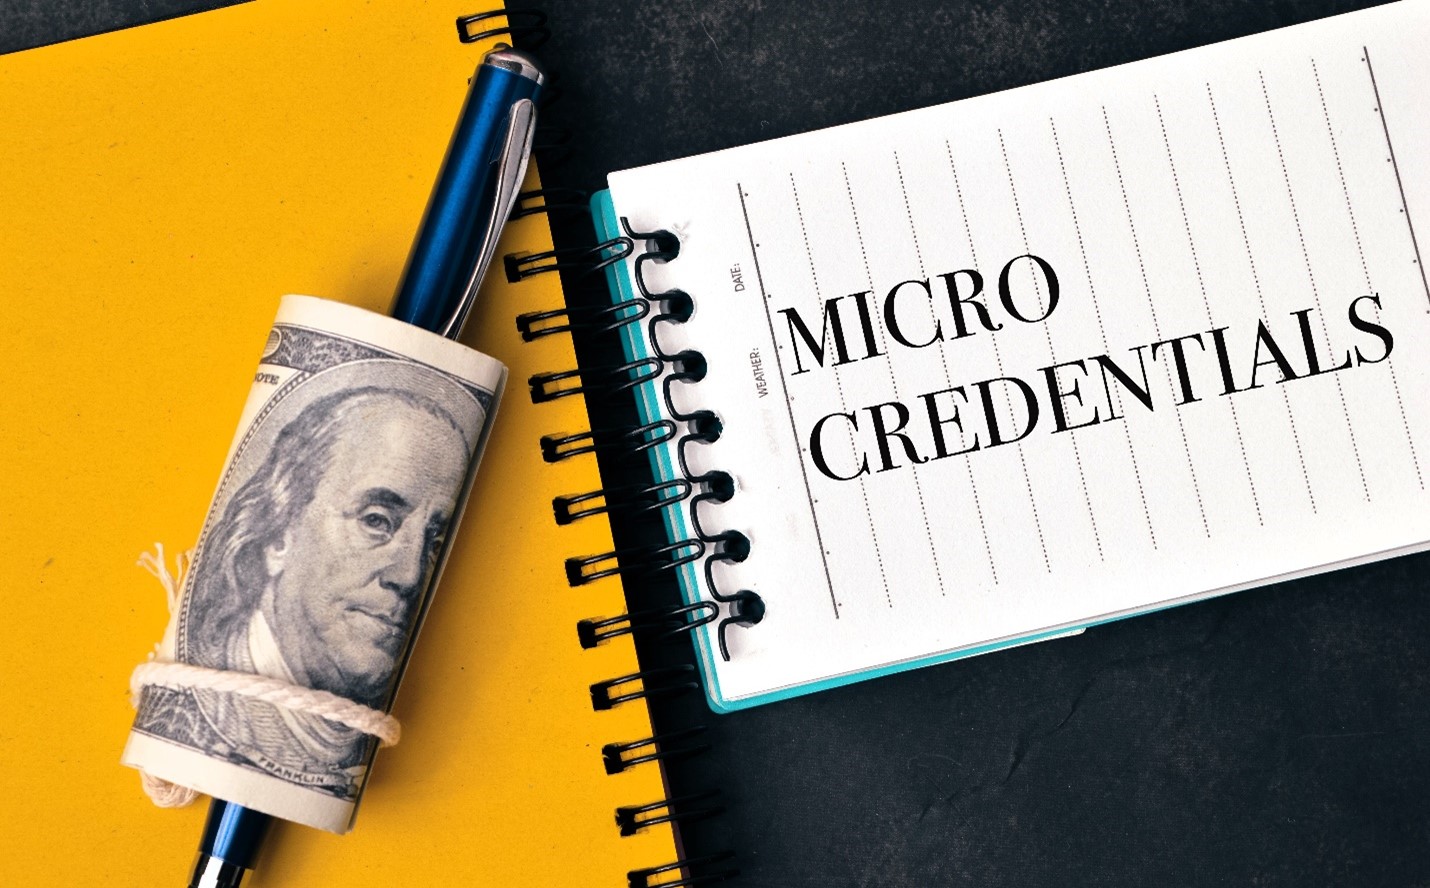 Micro credentials